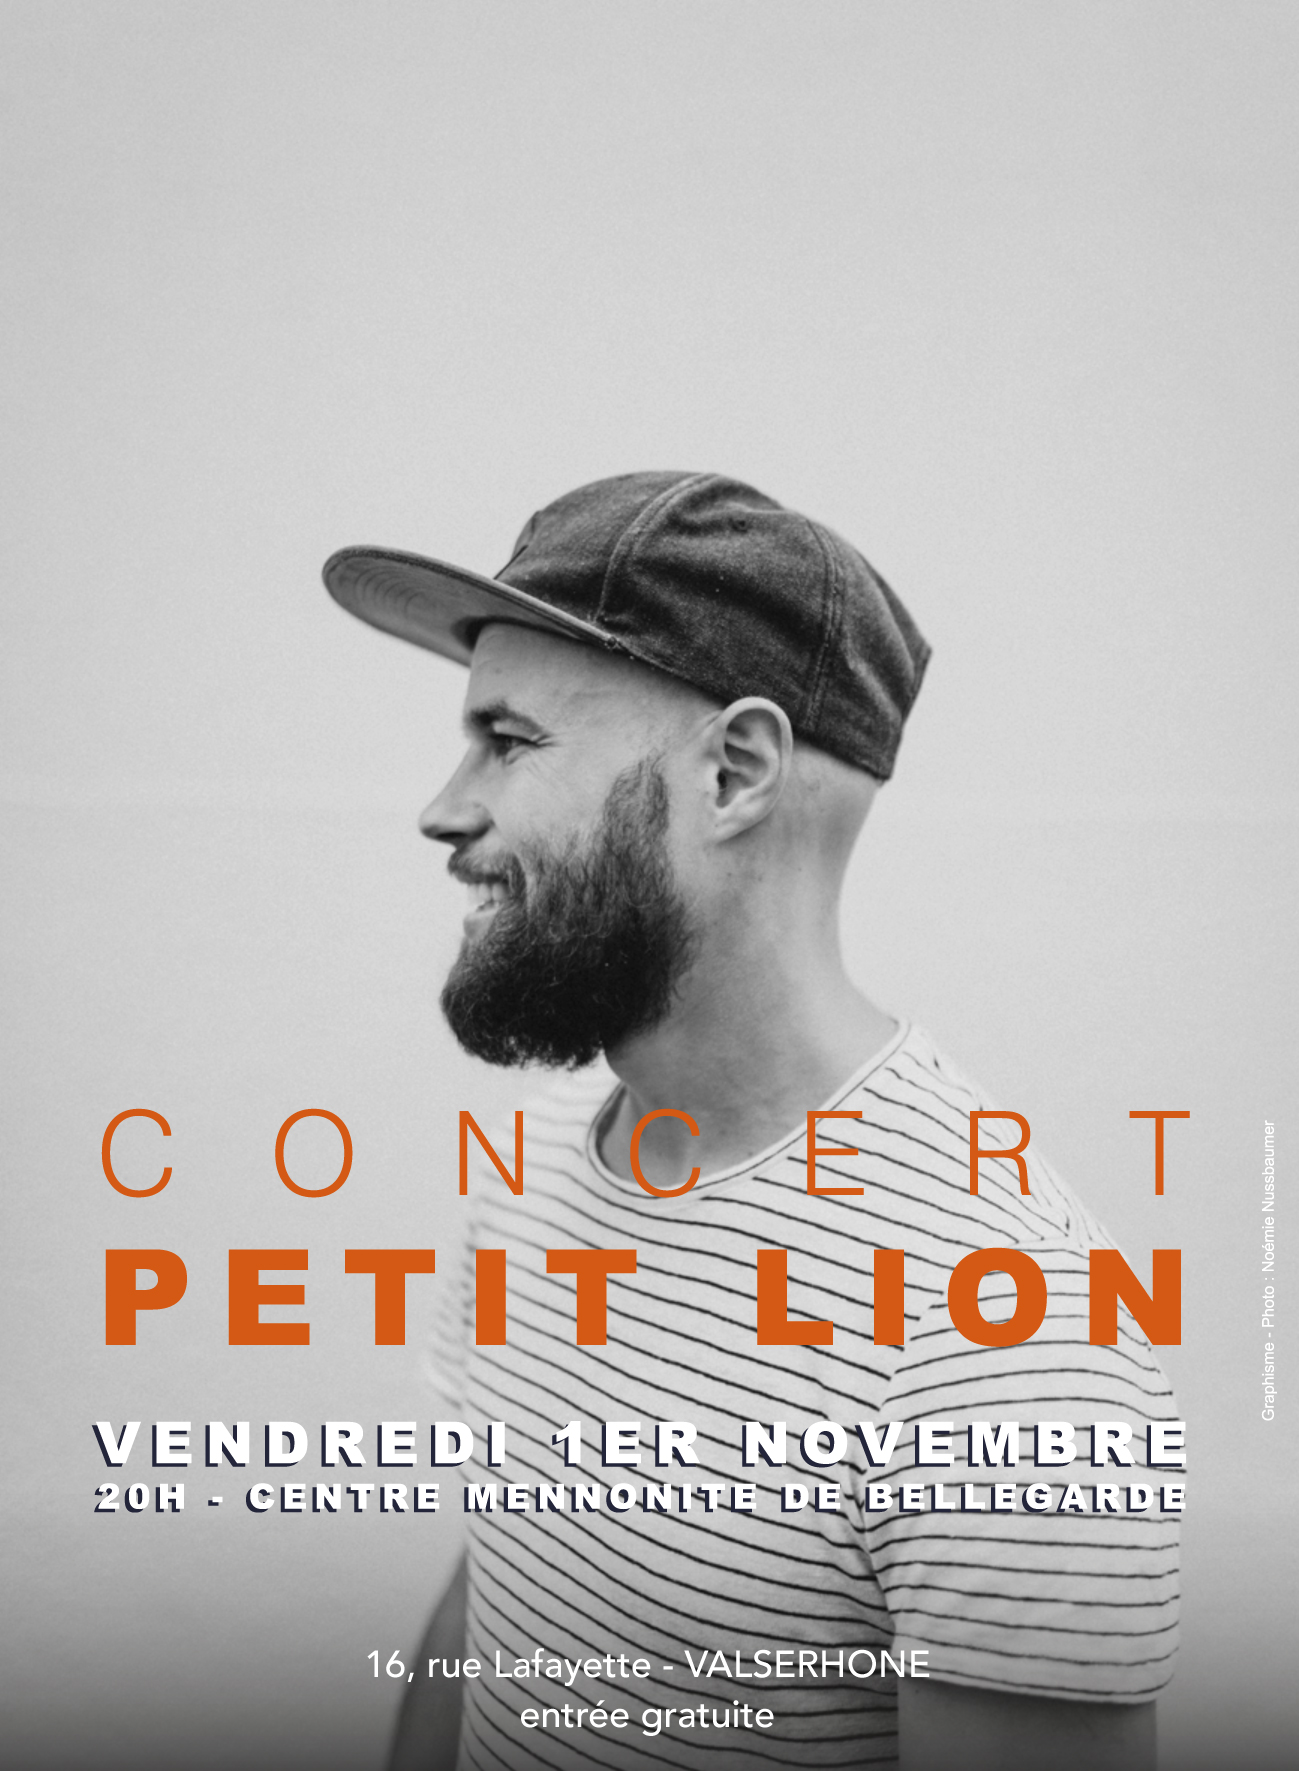 Petit Lion en concert Bellegarde